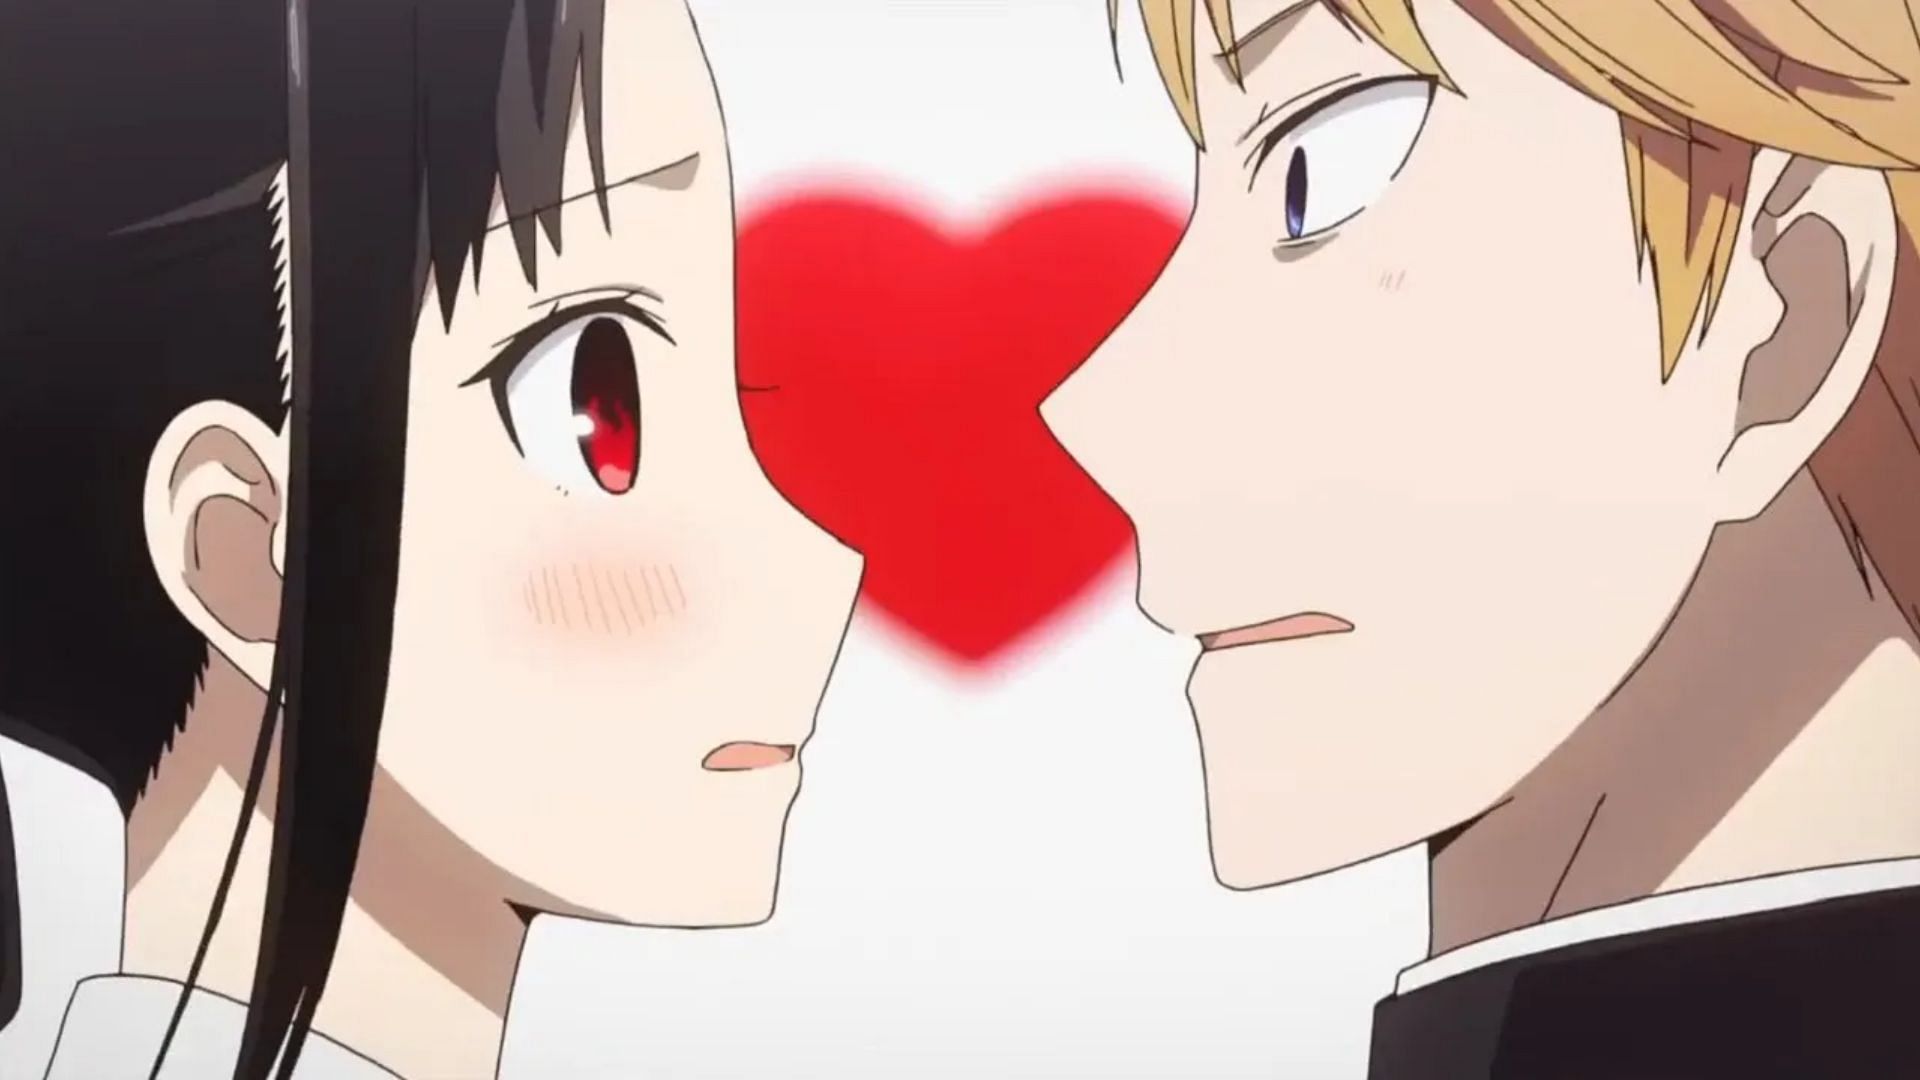 Kaguya-sama: Love is War: The First Kiss Never Ends Screens